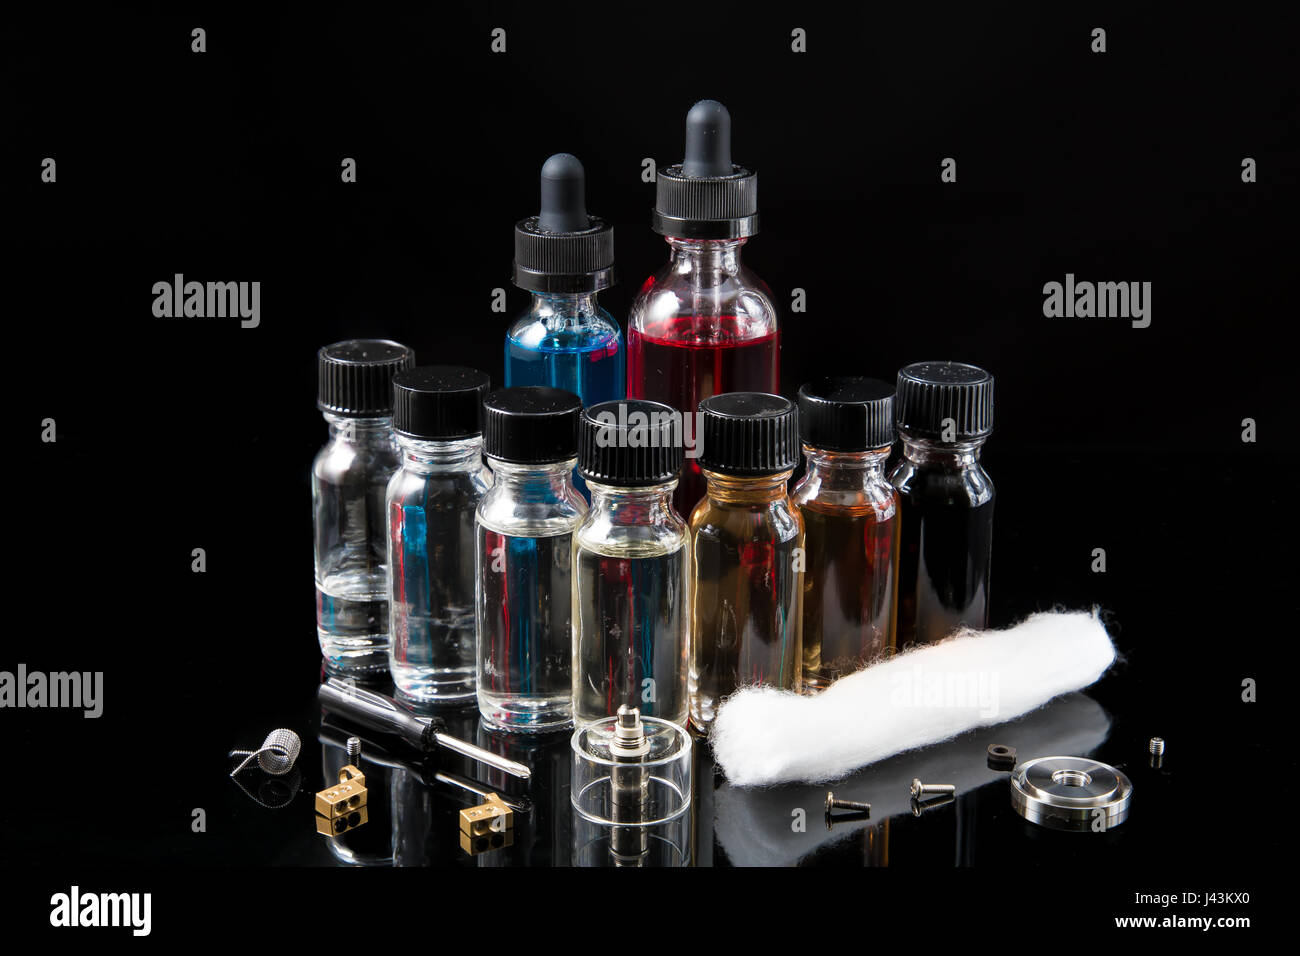 Vaporizer glass e-liquids with tools Stock Photo